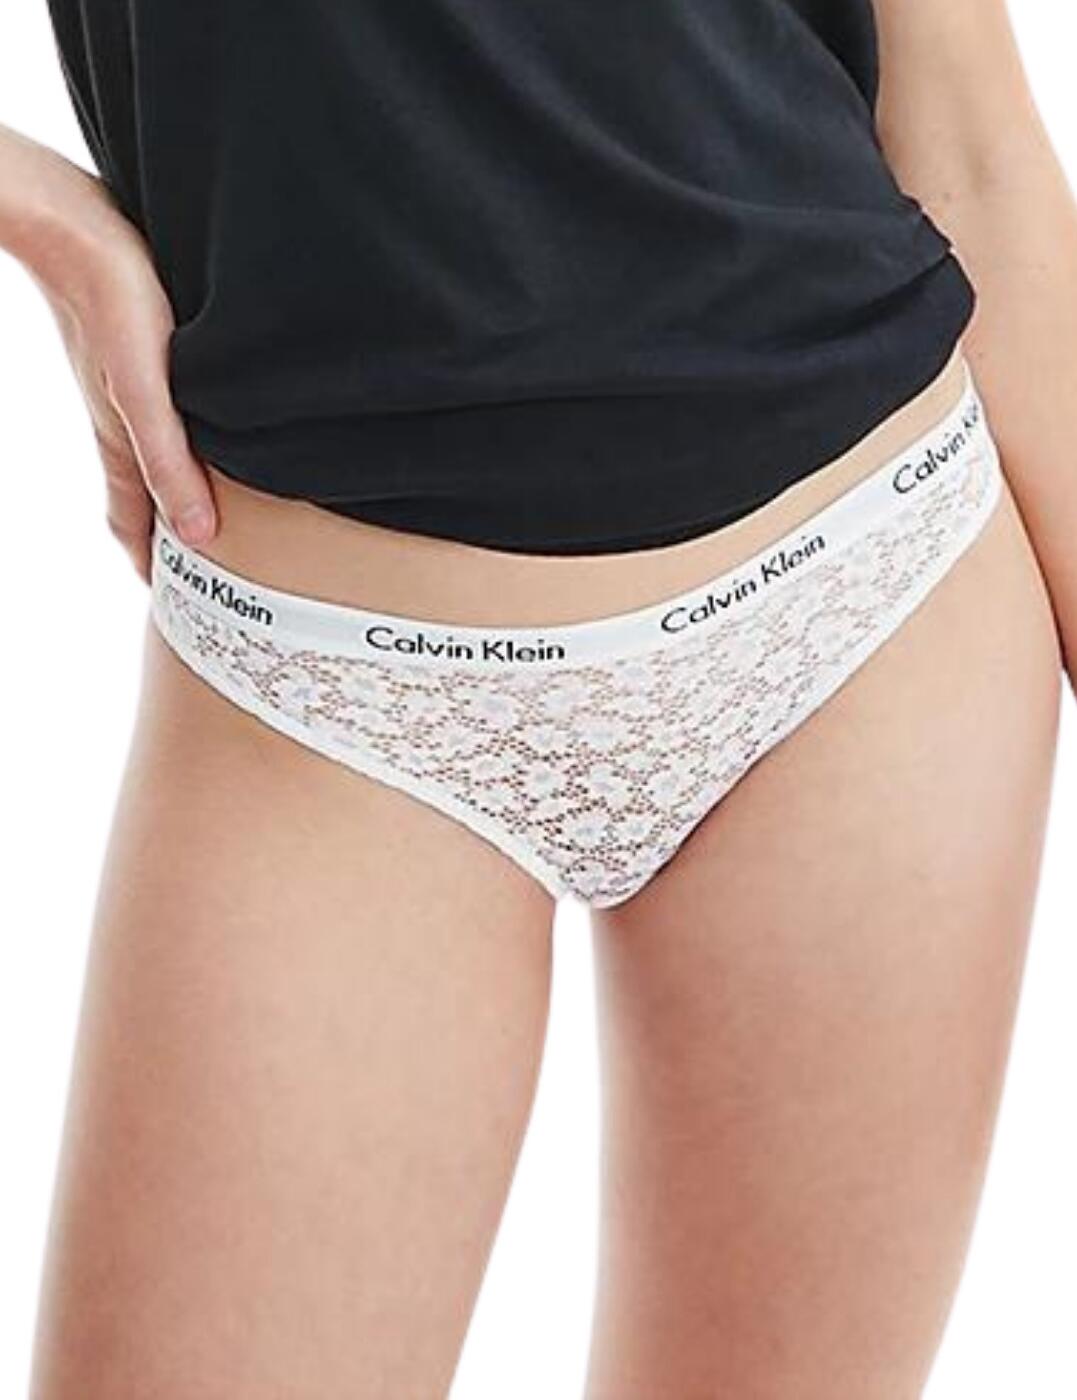 Calvin Klein Carousel Bikini 3pck Black/White/Nymphs Thigh